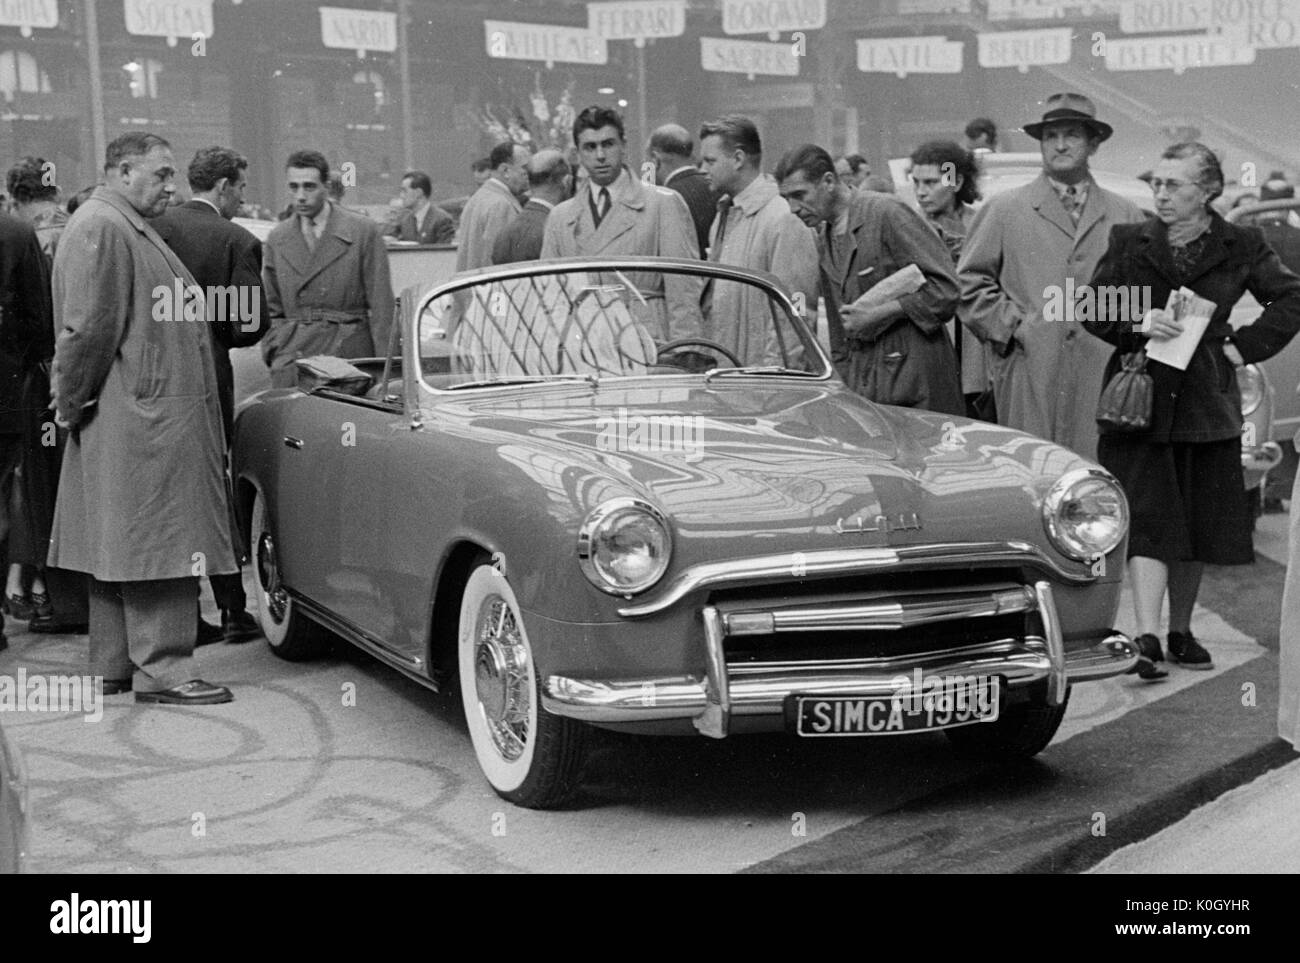 1953 Simca 8 sport Stock Photo